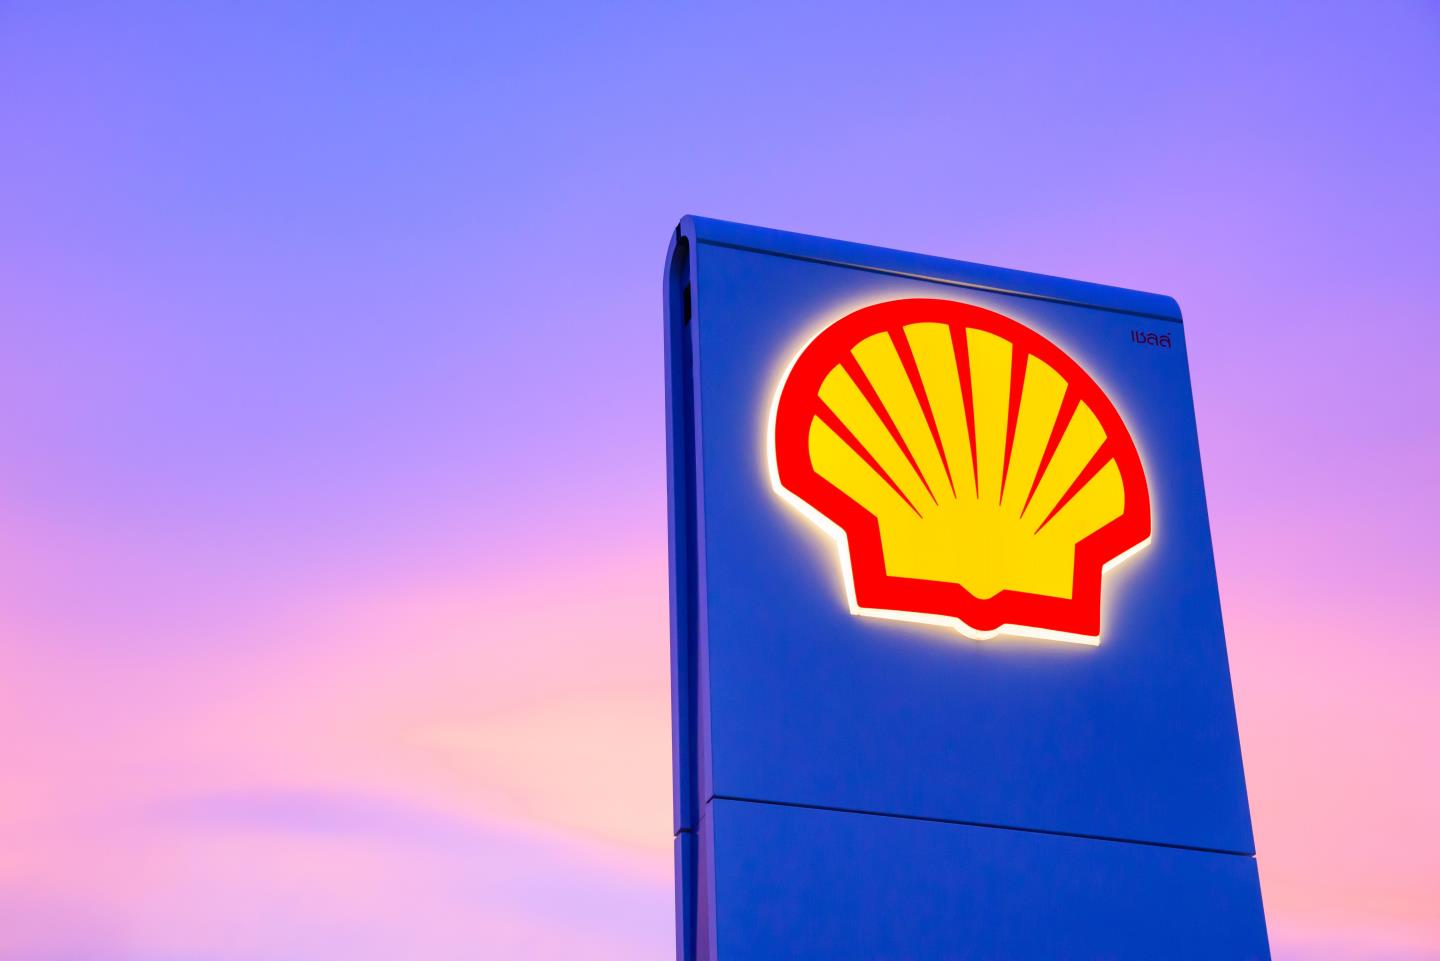 Jepang menawarkan pinjaman kepada Indonesia untuk membeli saham Shell Masela LNG